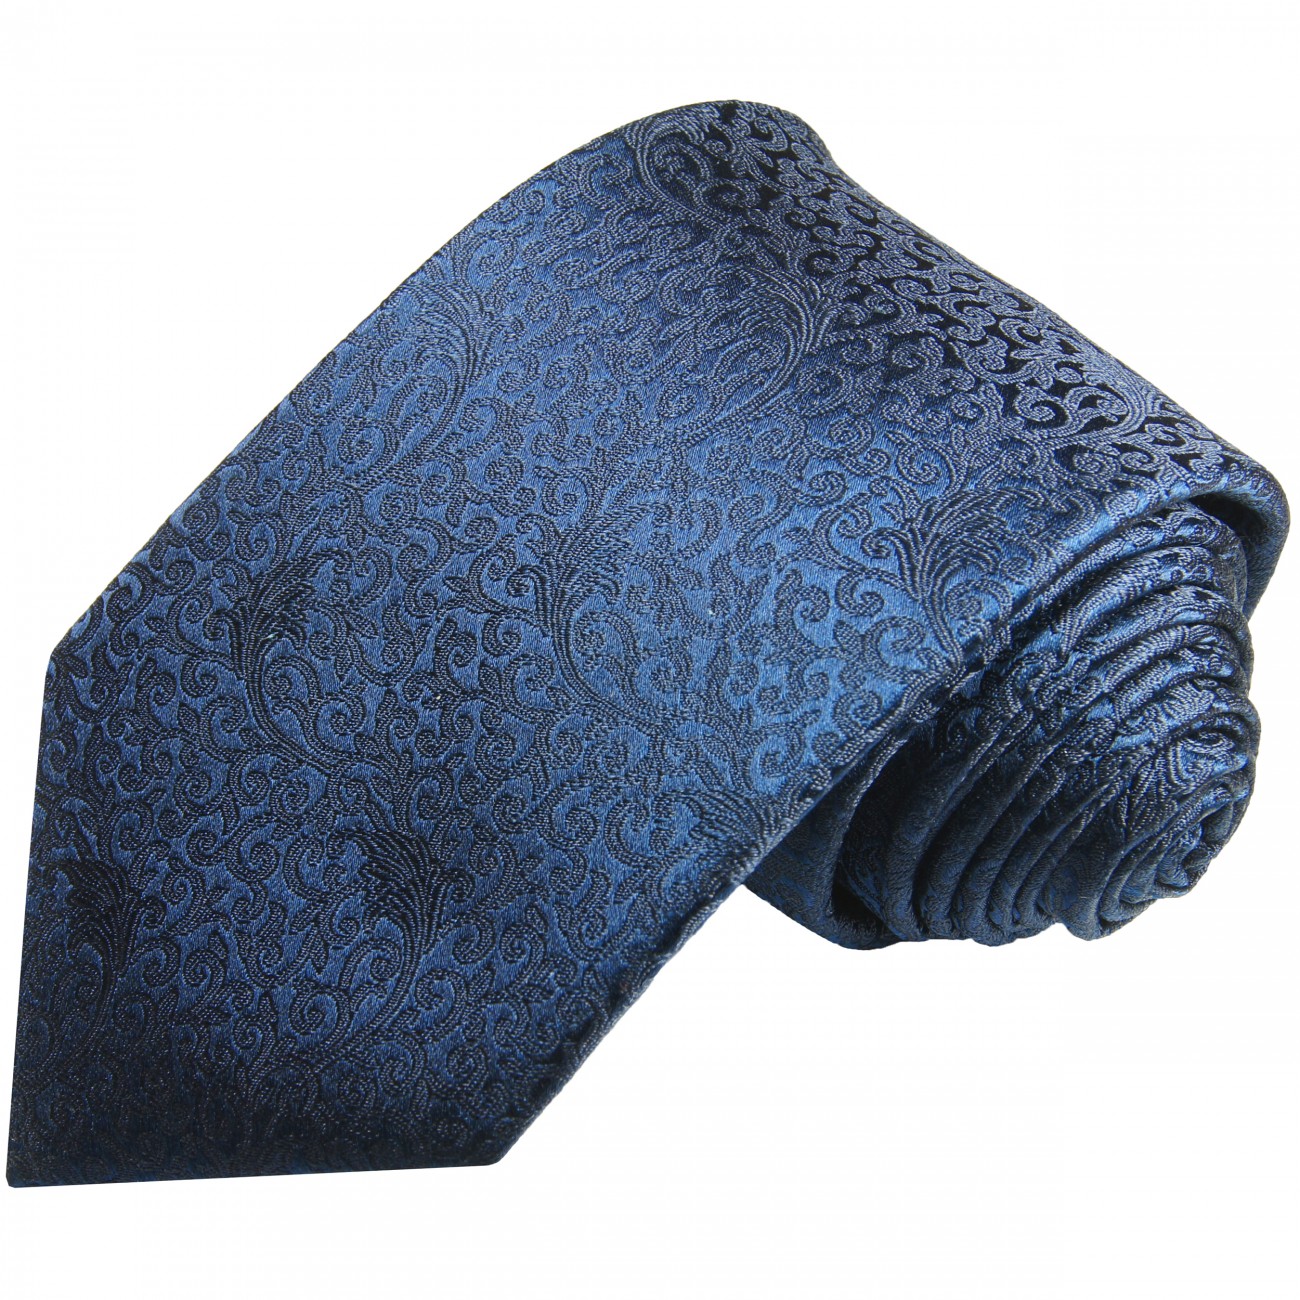 Krawatte dunkelblau floral  Seide